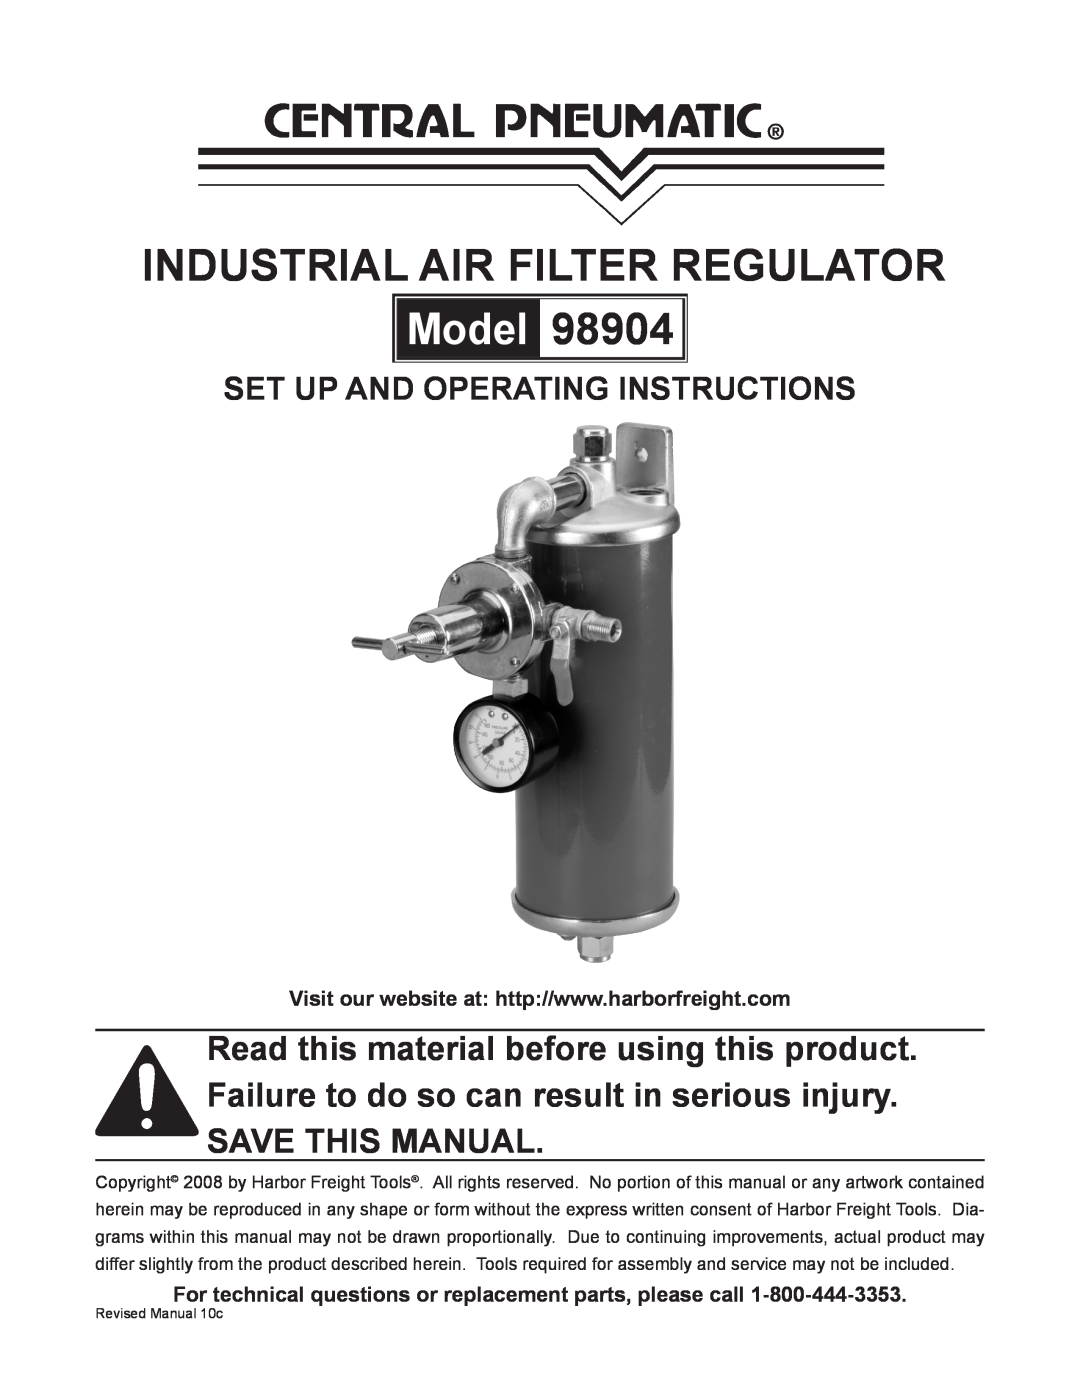 Harbor Freight Tools 98904 operating instructions industrial air filter regulator, Model 